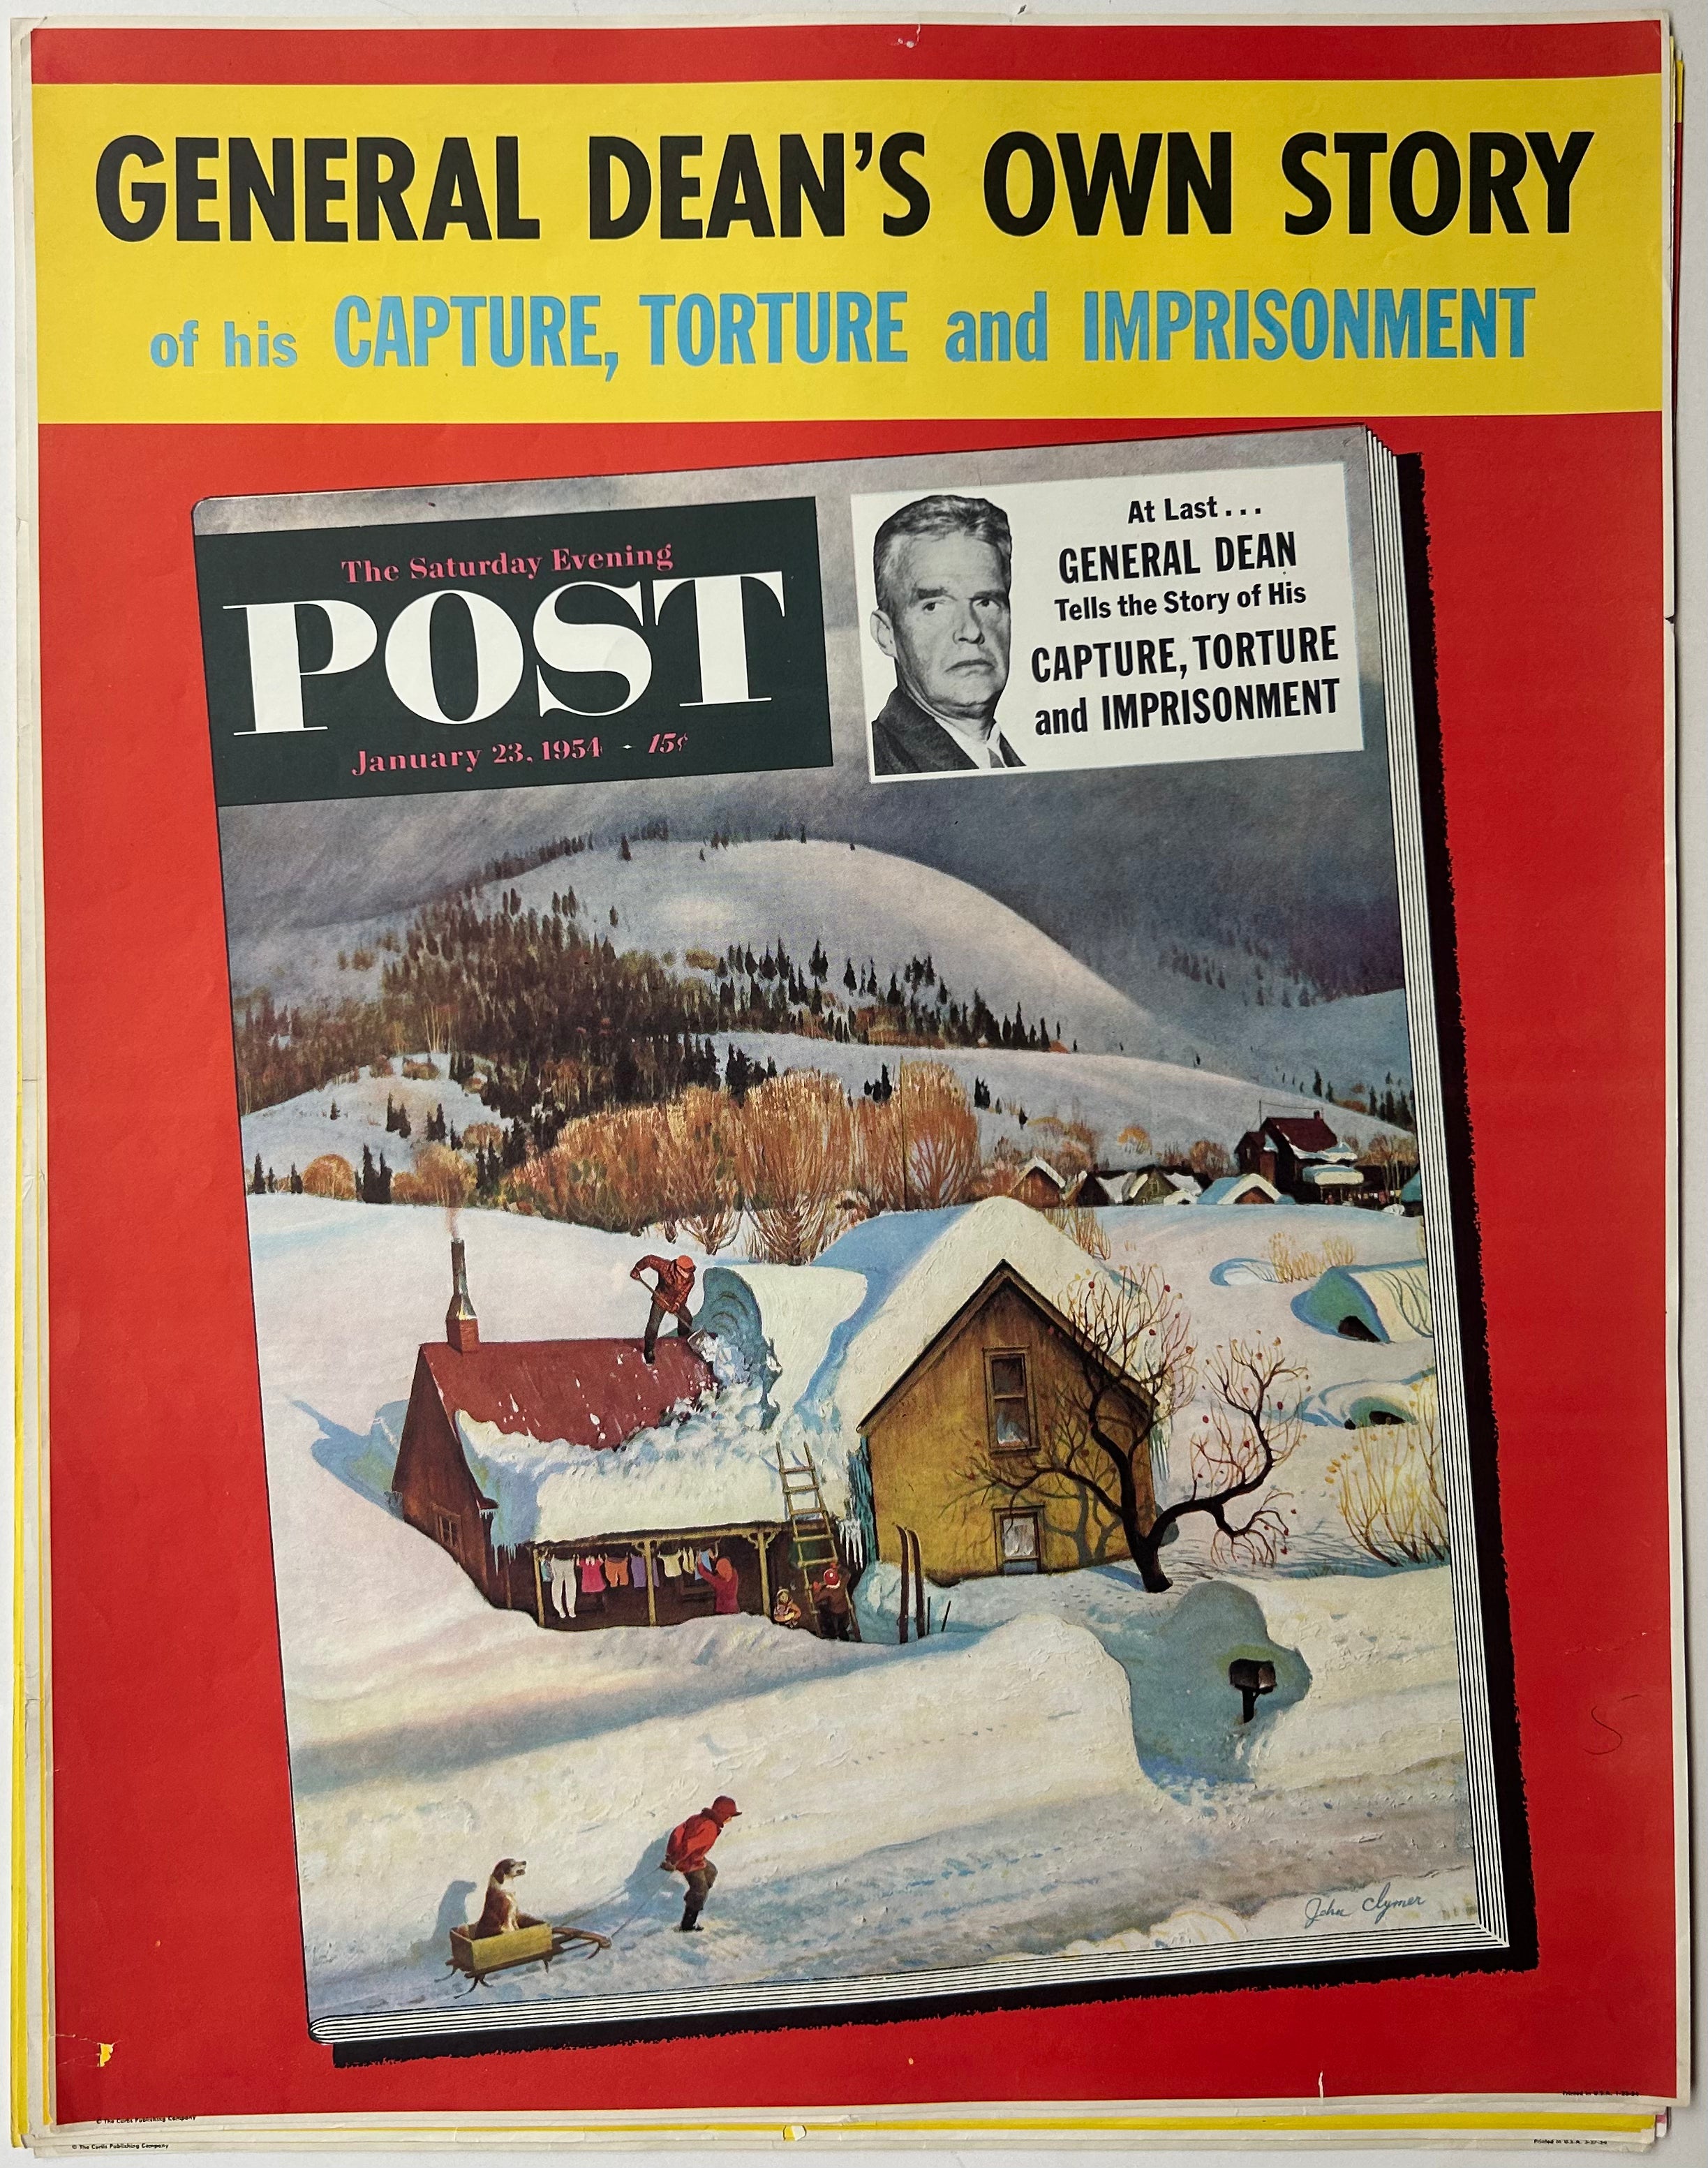 Saturday Evening Post January 23, 1954 ✓